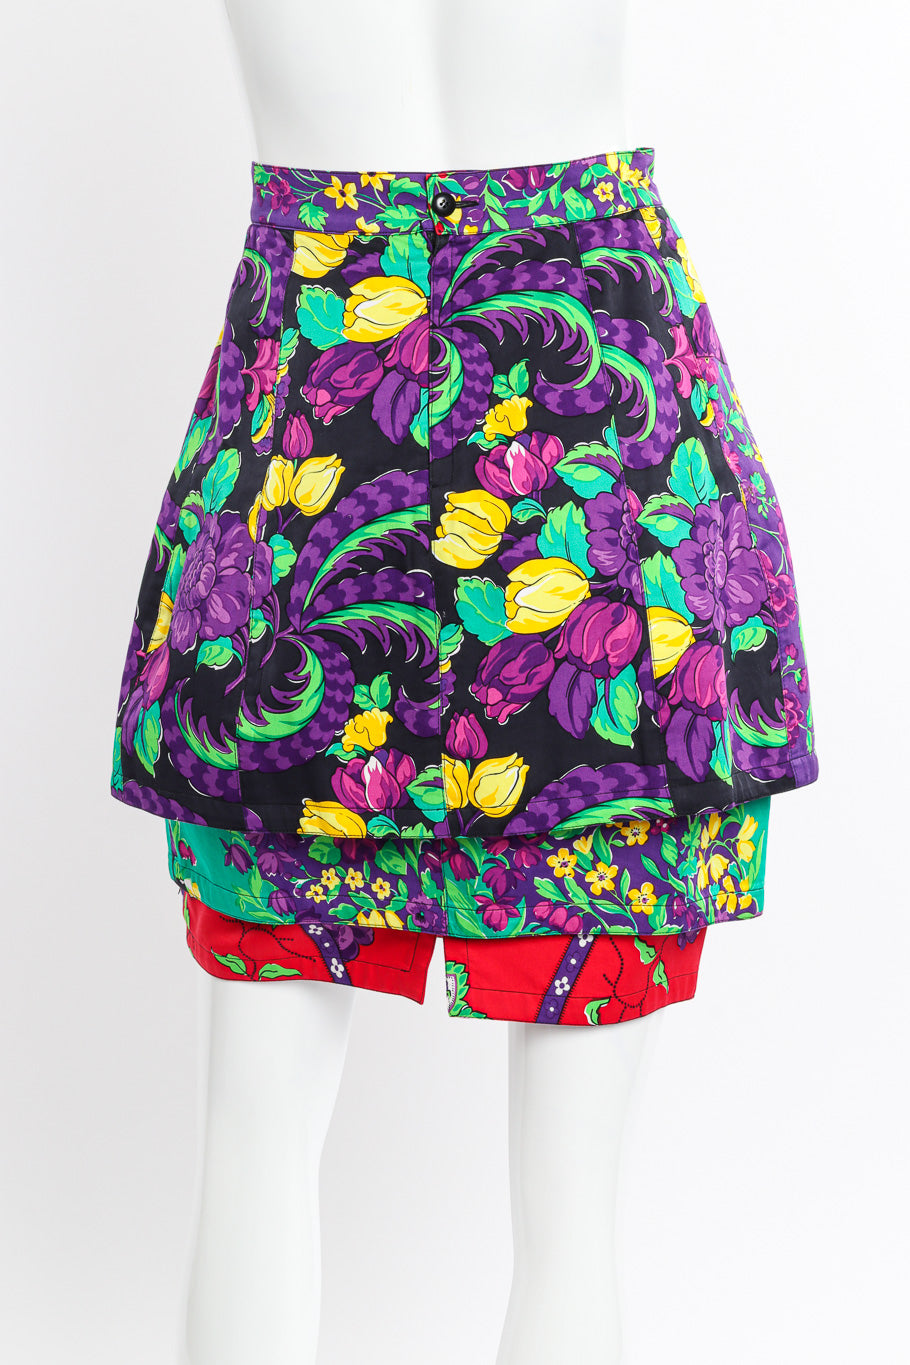 Vintage Gianni Versace Floral Cotton Tier Skirt back view on mannequin @Recessla